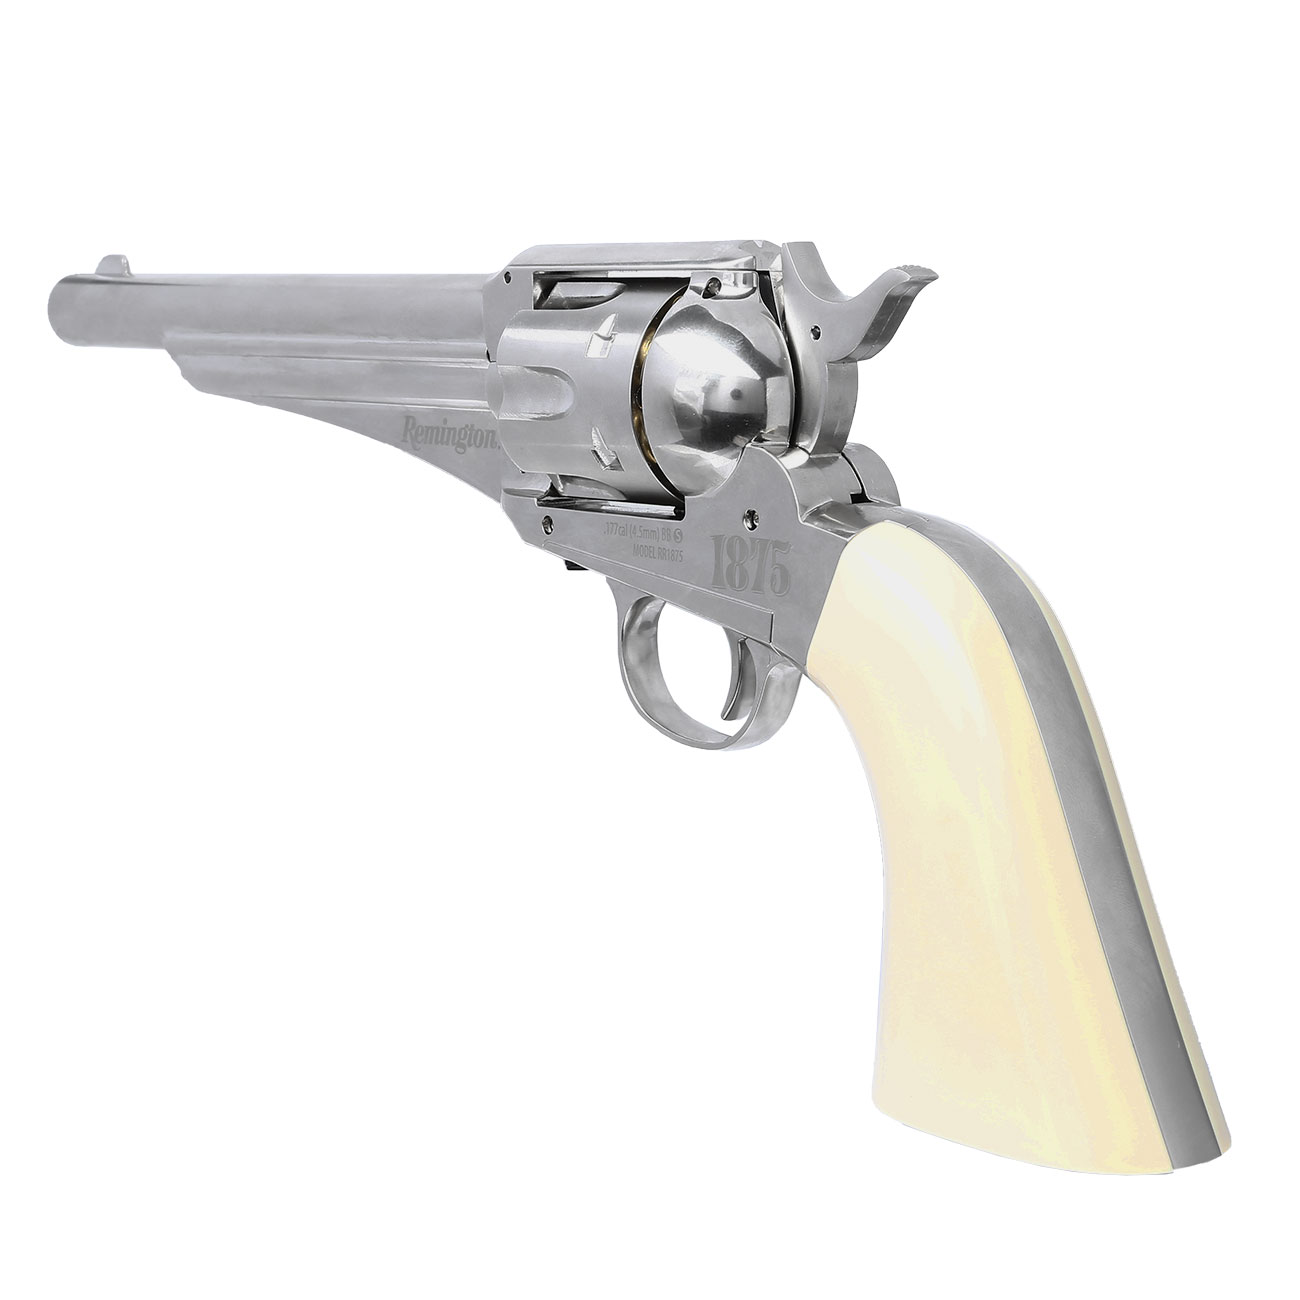 Remington 1875 CO2-Revolver Kal. 4,5 mm Diabolo/Stahl-BB nickel/Elfenbein-optik Vollmetall Bild 1